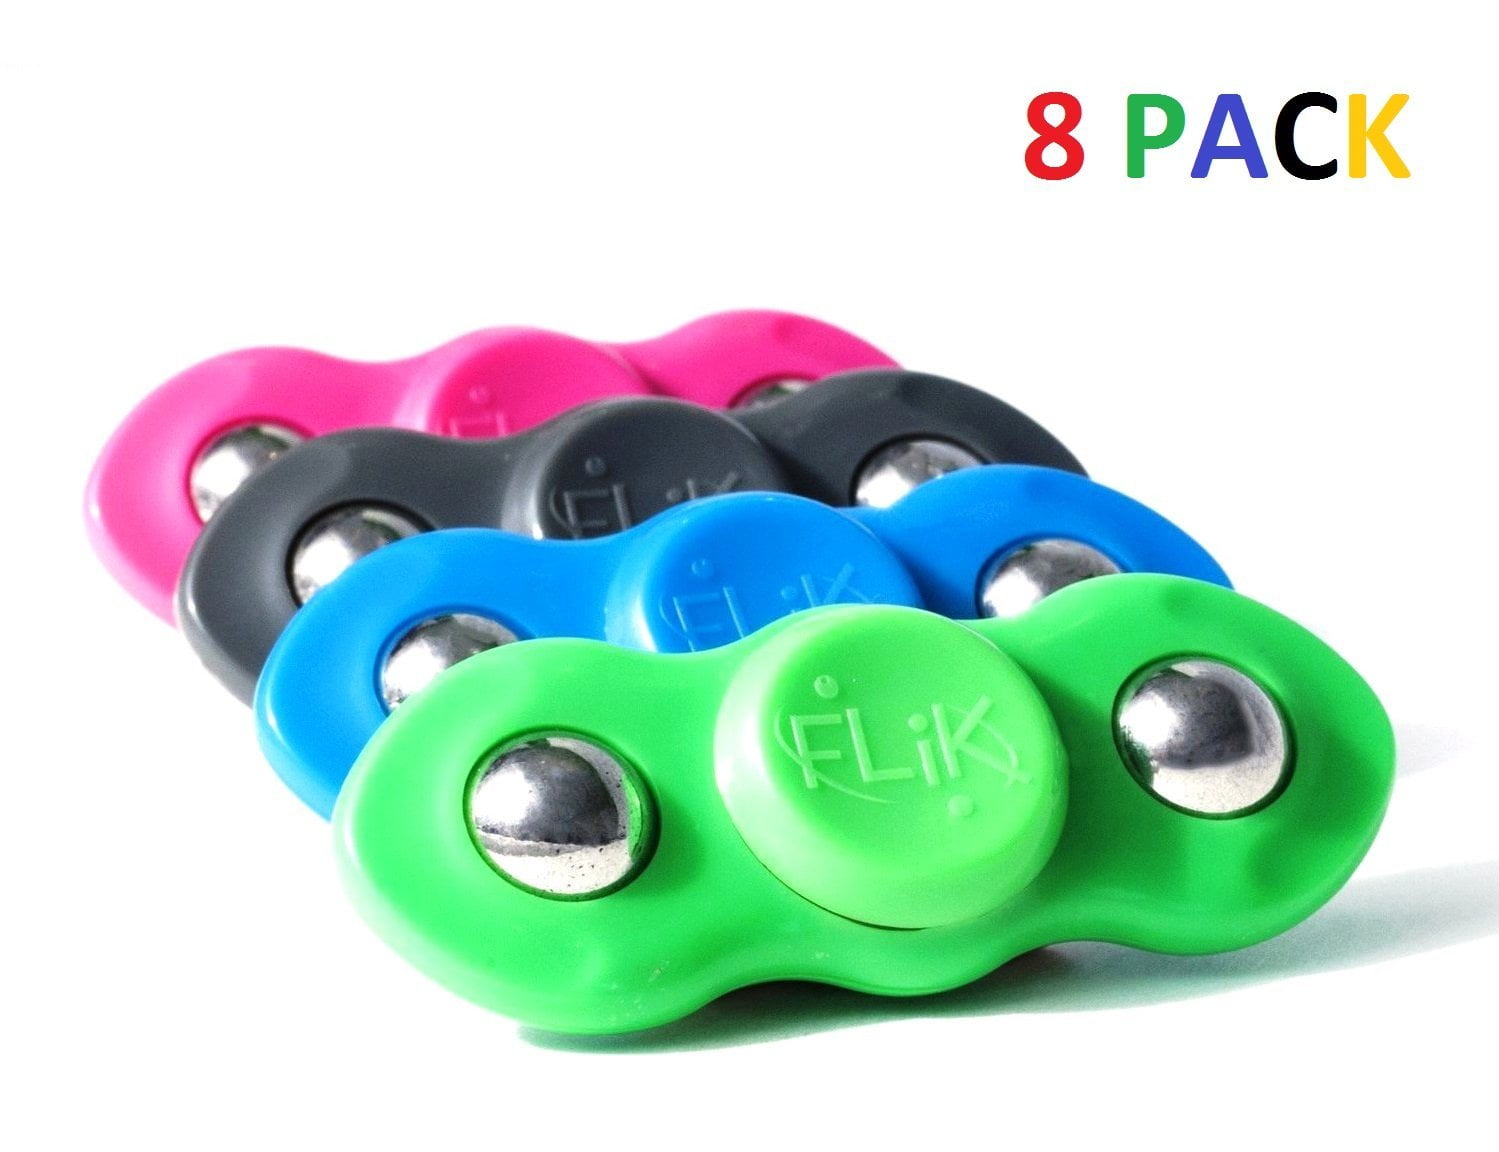 8 PACK Flik Hand Spinners Helps Focusing Fidget Focus Toy for Kids & Adults  Stress Reducing Fidget Spinner